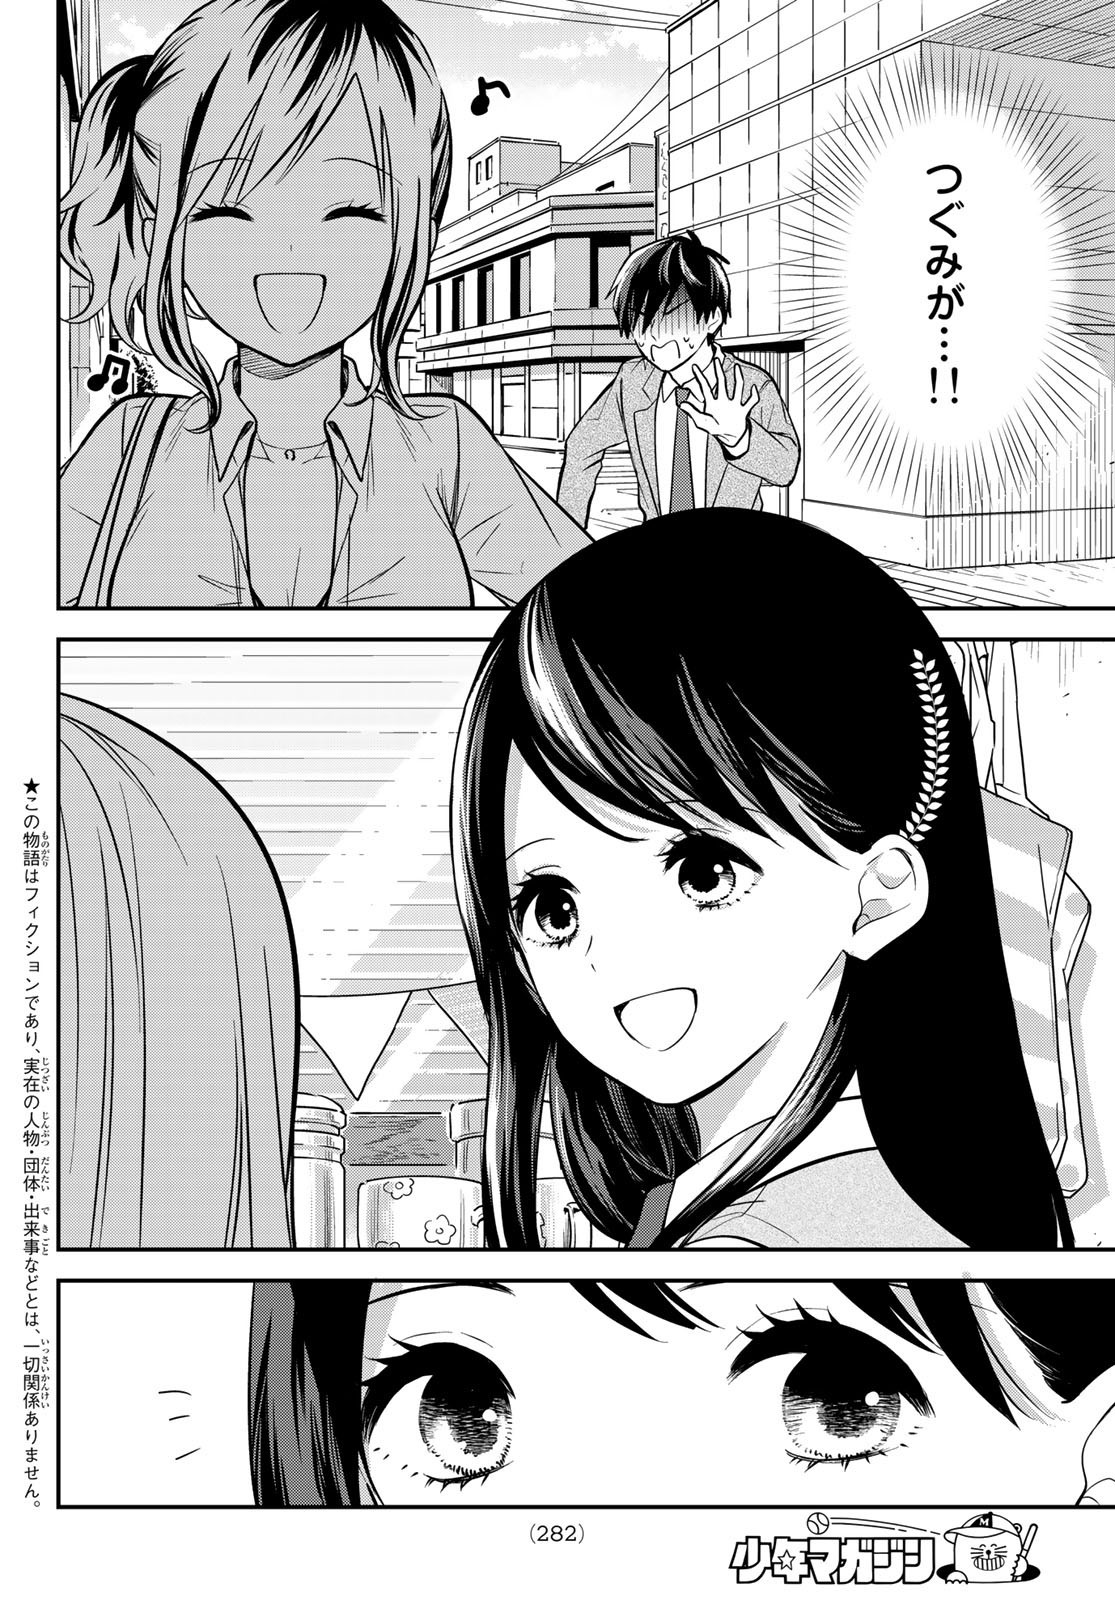 Kimi ga Megami Nara Ii no ni (I Wish You Were My Muse) - Chapter 008 - Page 2